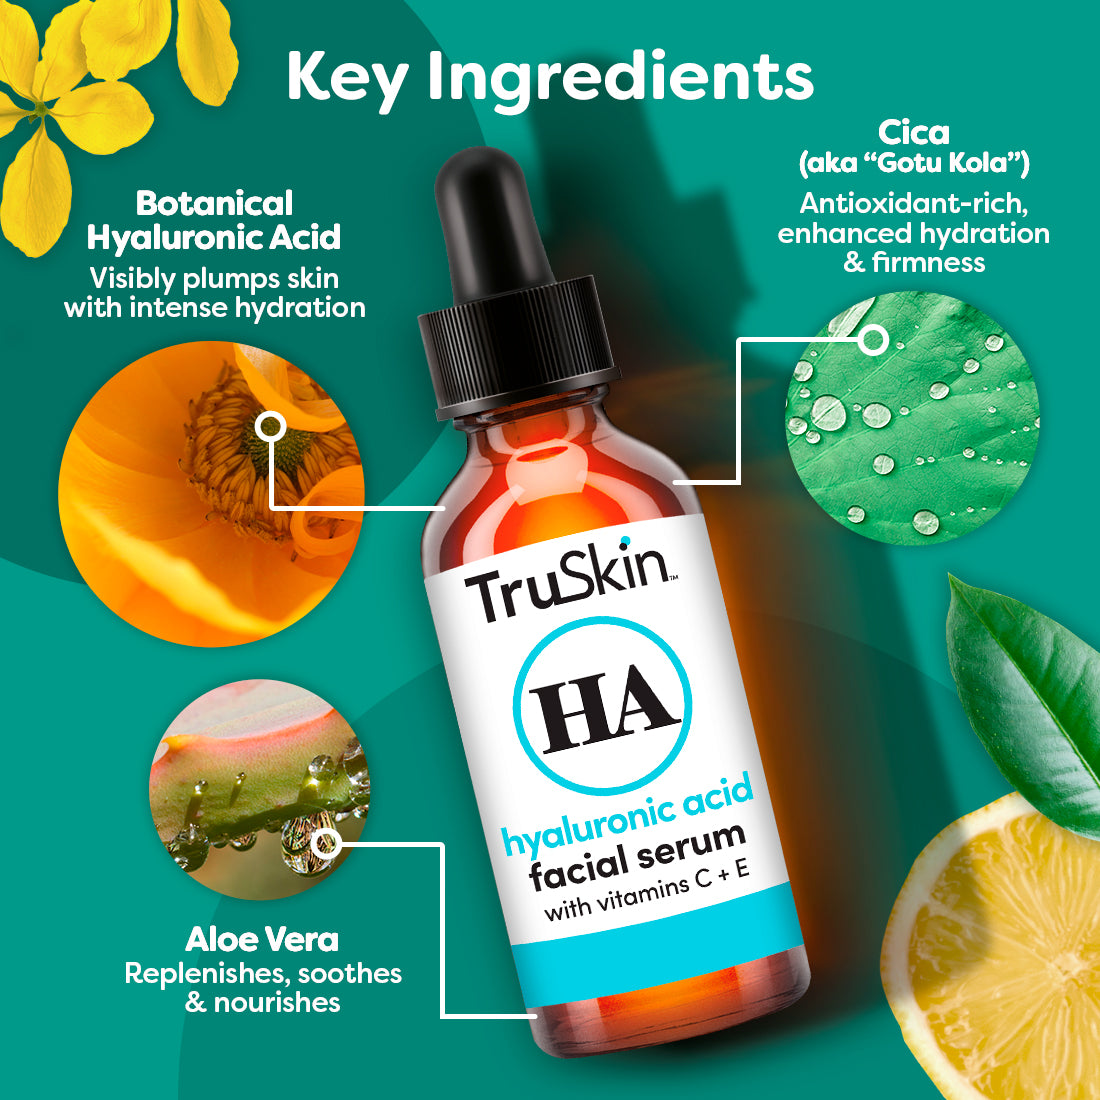 TruSkin Age Defying 3-Pack Bundle with Vitamin C Serum, Retinol Serum and Hyaluronic Acid